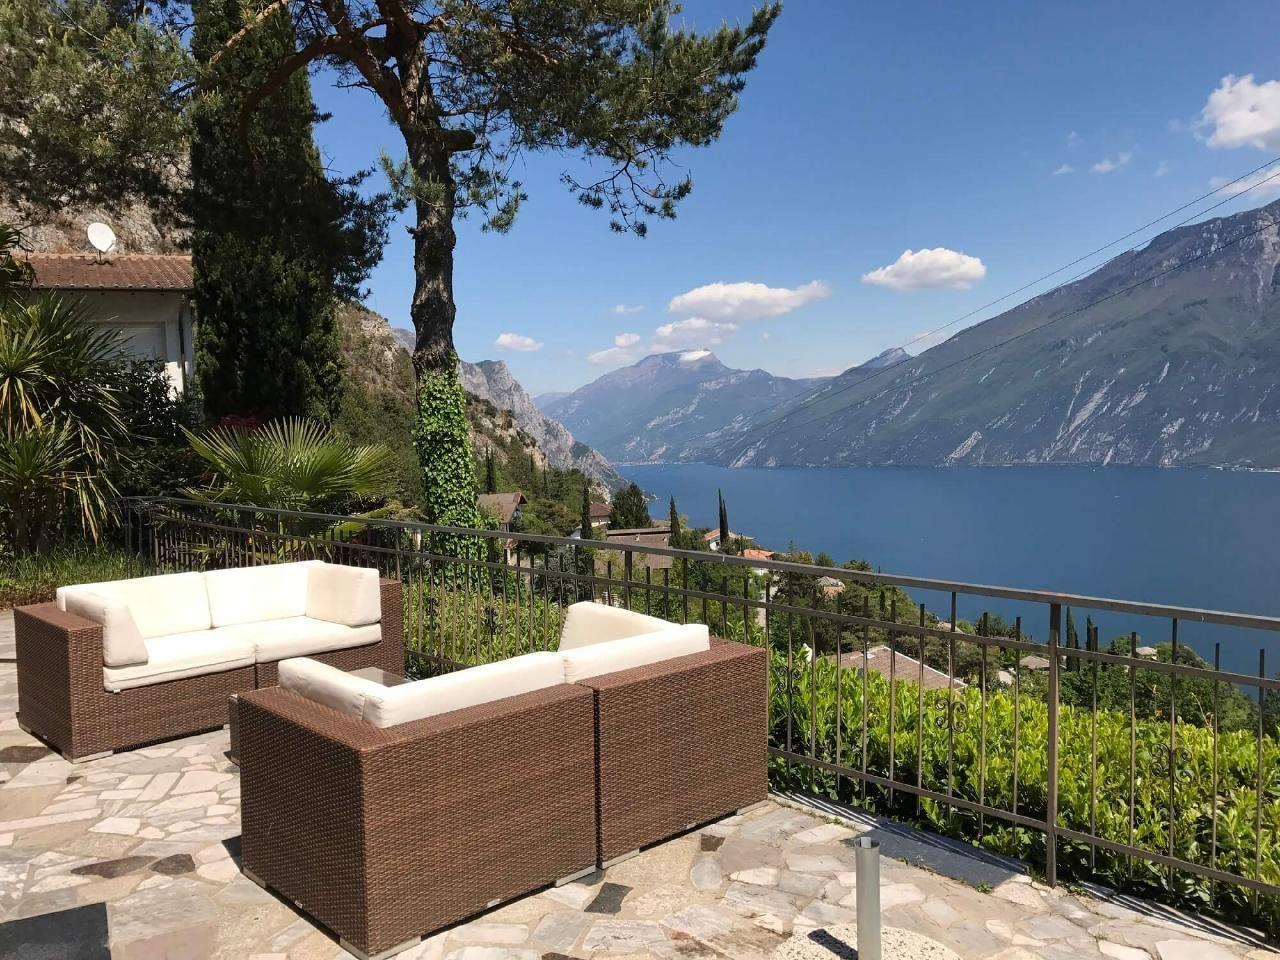 Ferienhaus in ruhiger Lage mit traumhaftem Panoram   Gardasee - Lago di Garda